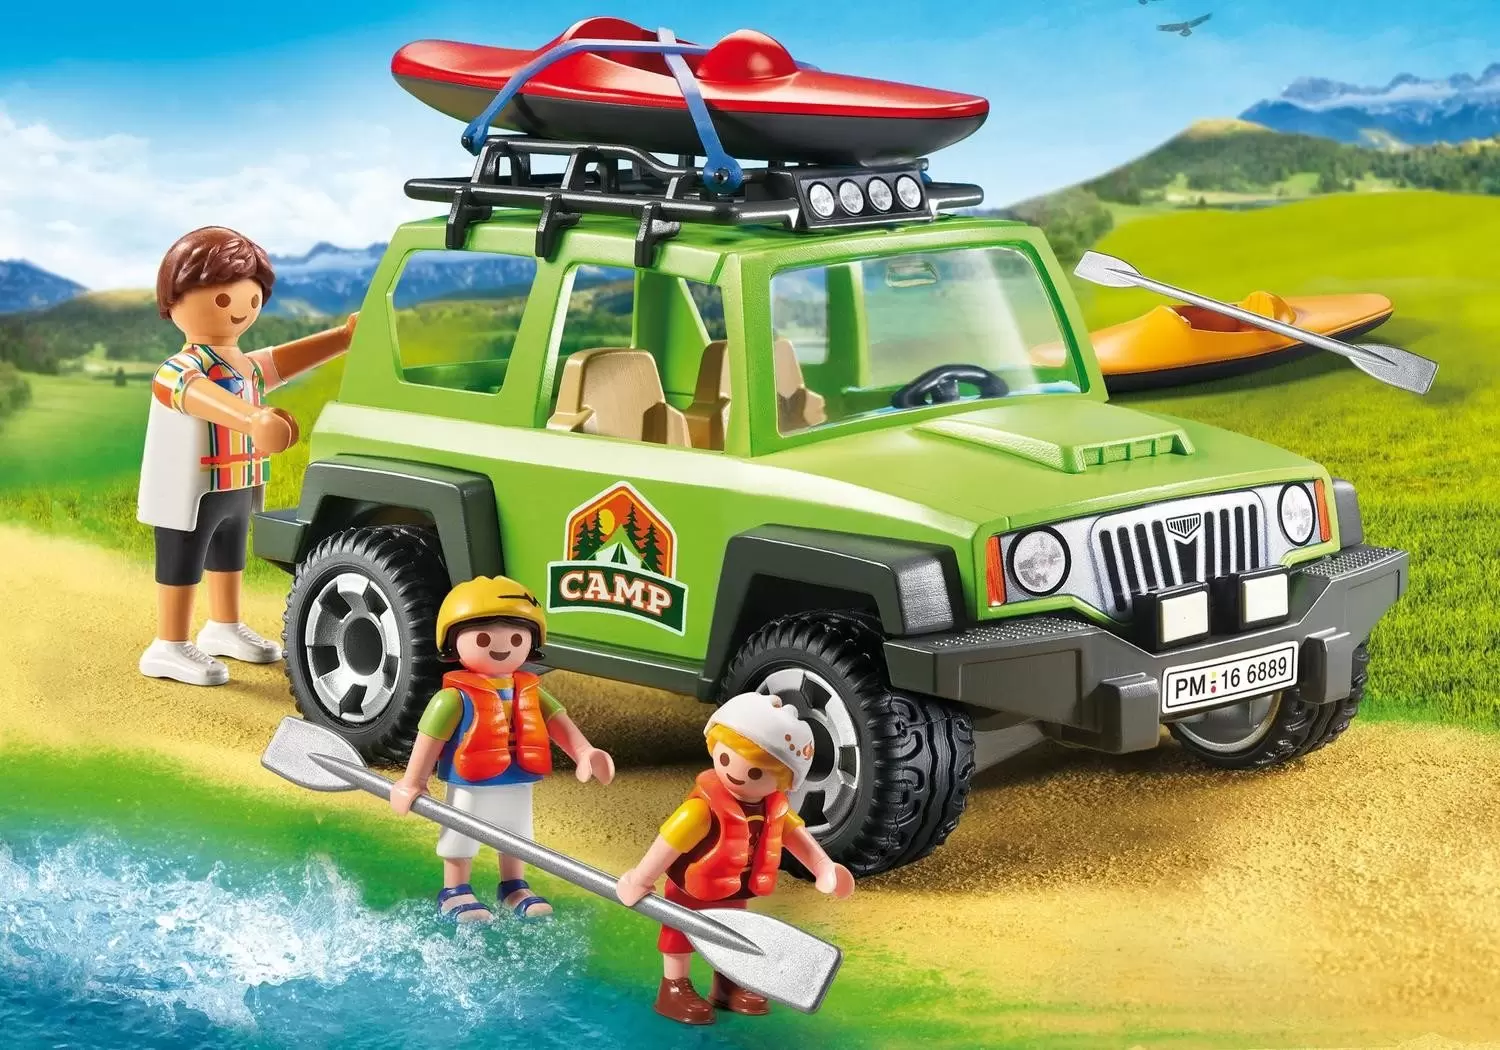 Playmobil en vacances - 4x4 de randonnée avec kayaks